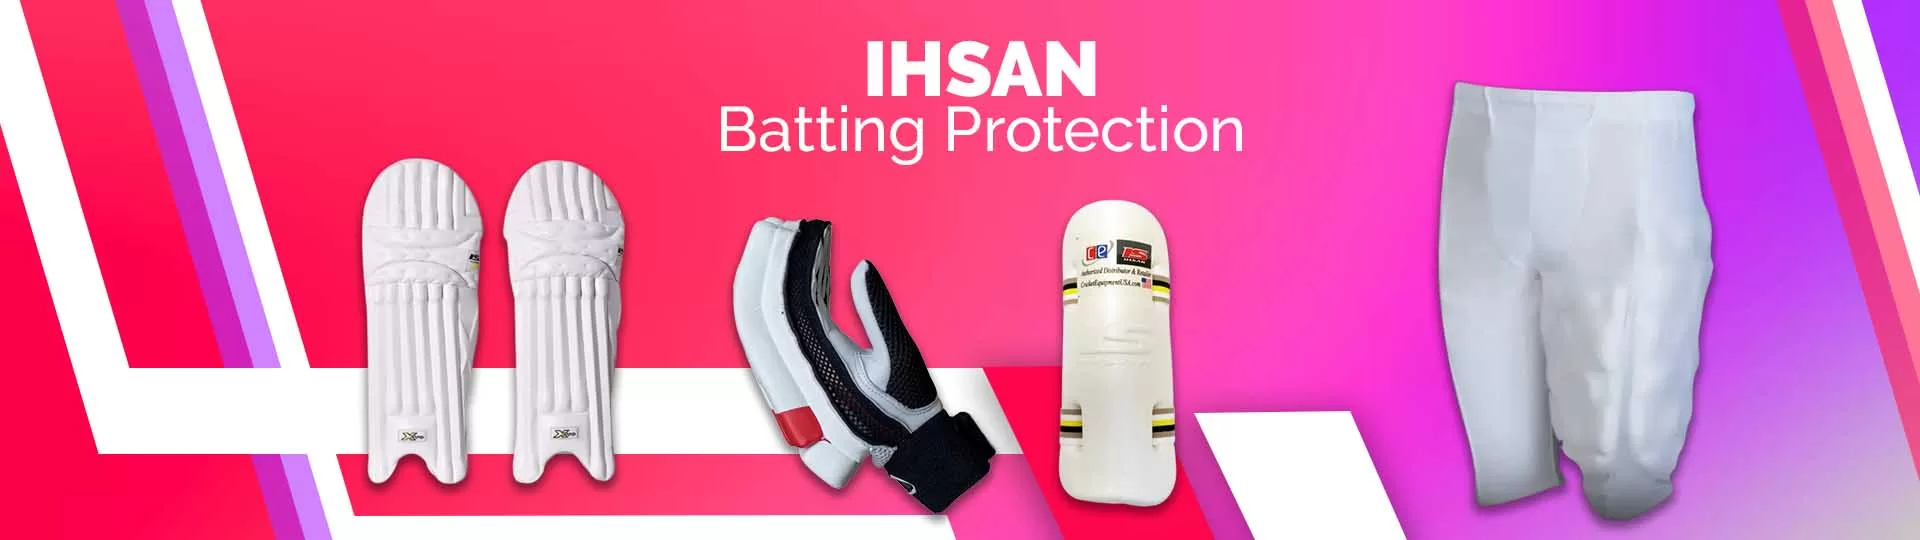 Ihsan Cricket Protection